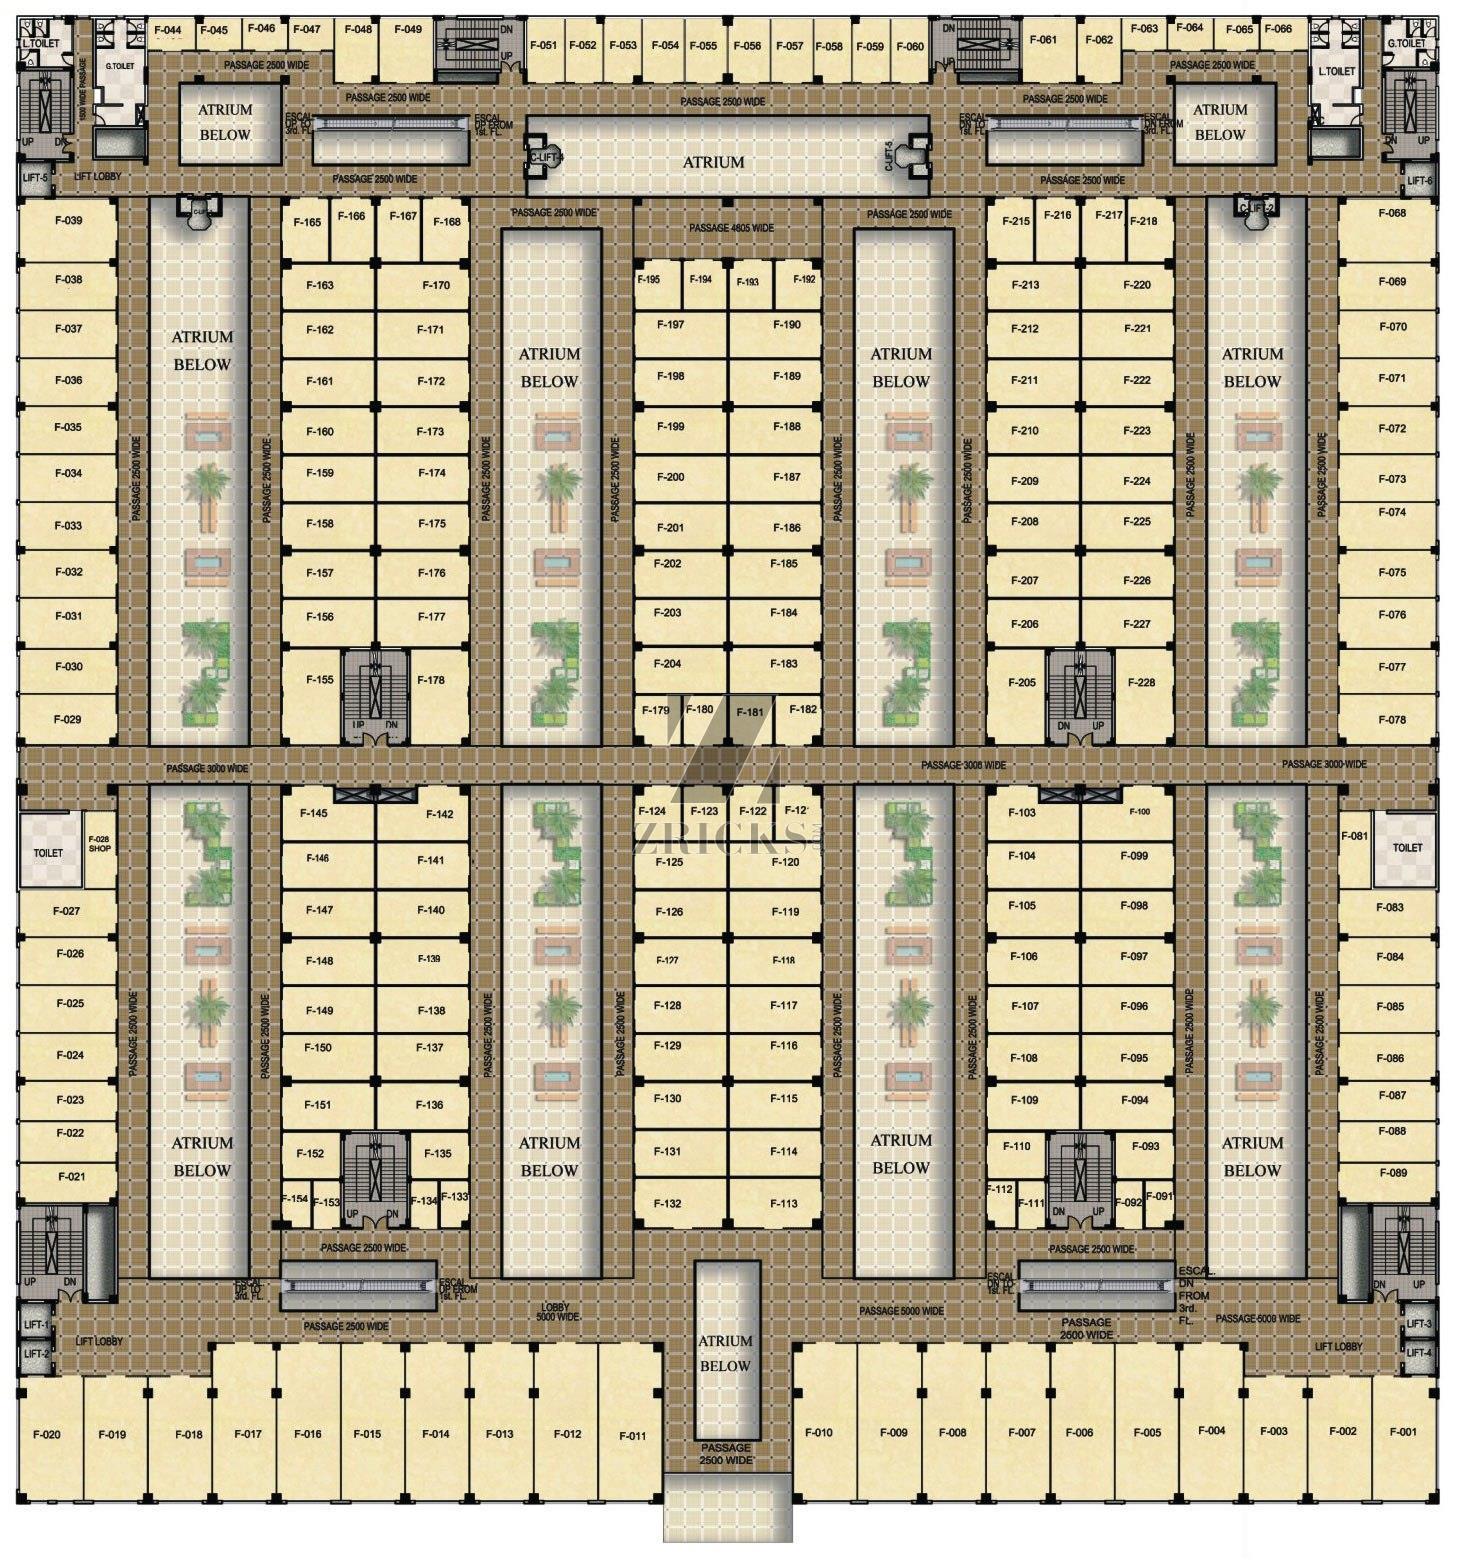 Parsvnath City Centre Floor Plan